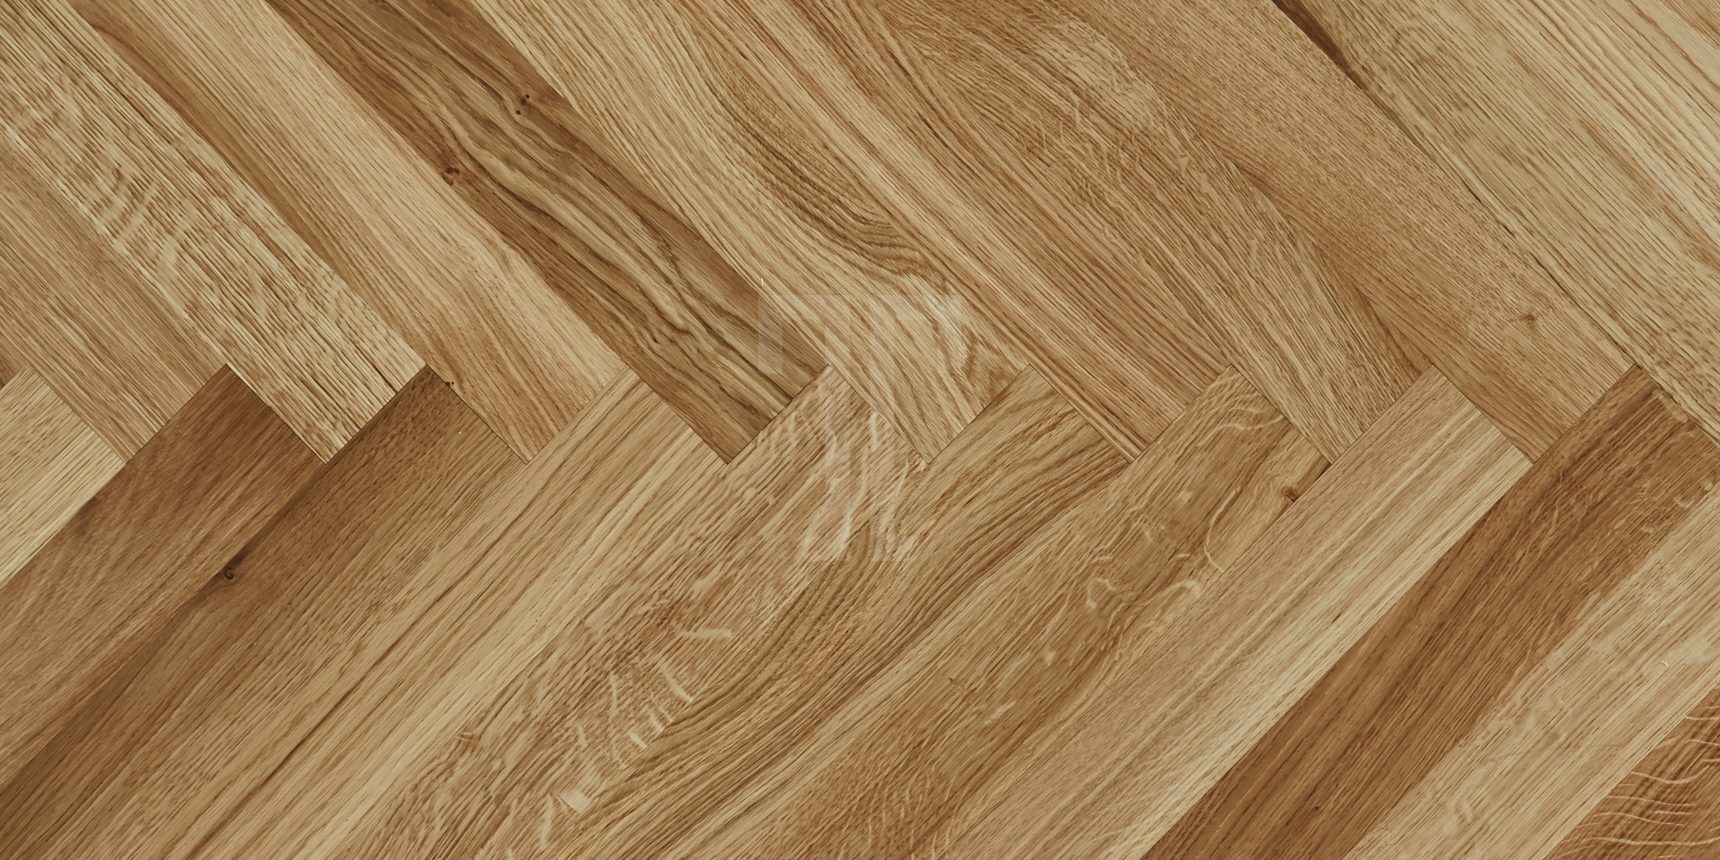 wood floor belvoir pale herringbone parquet wood flooring blocks, patterns and panels  collection UIYHWTS